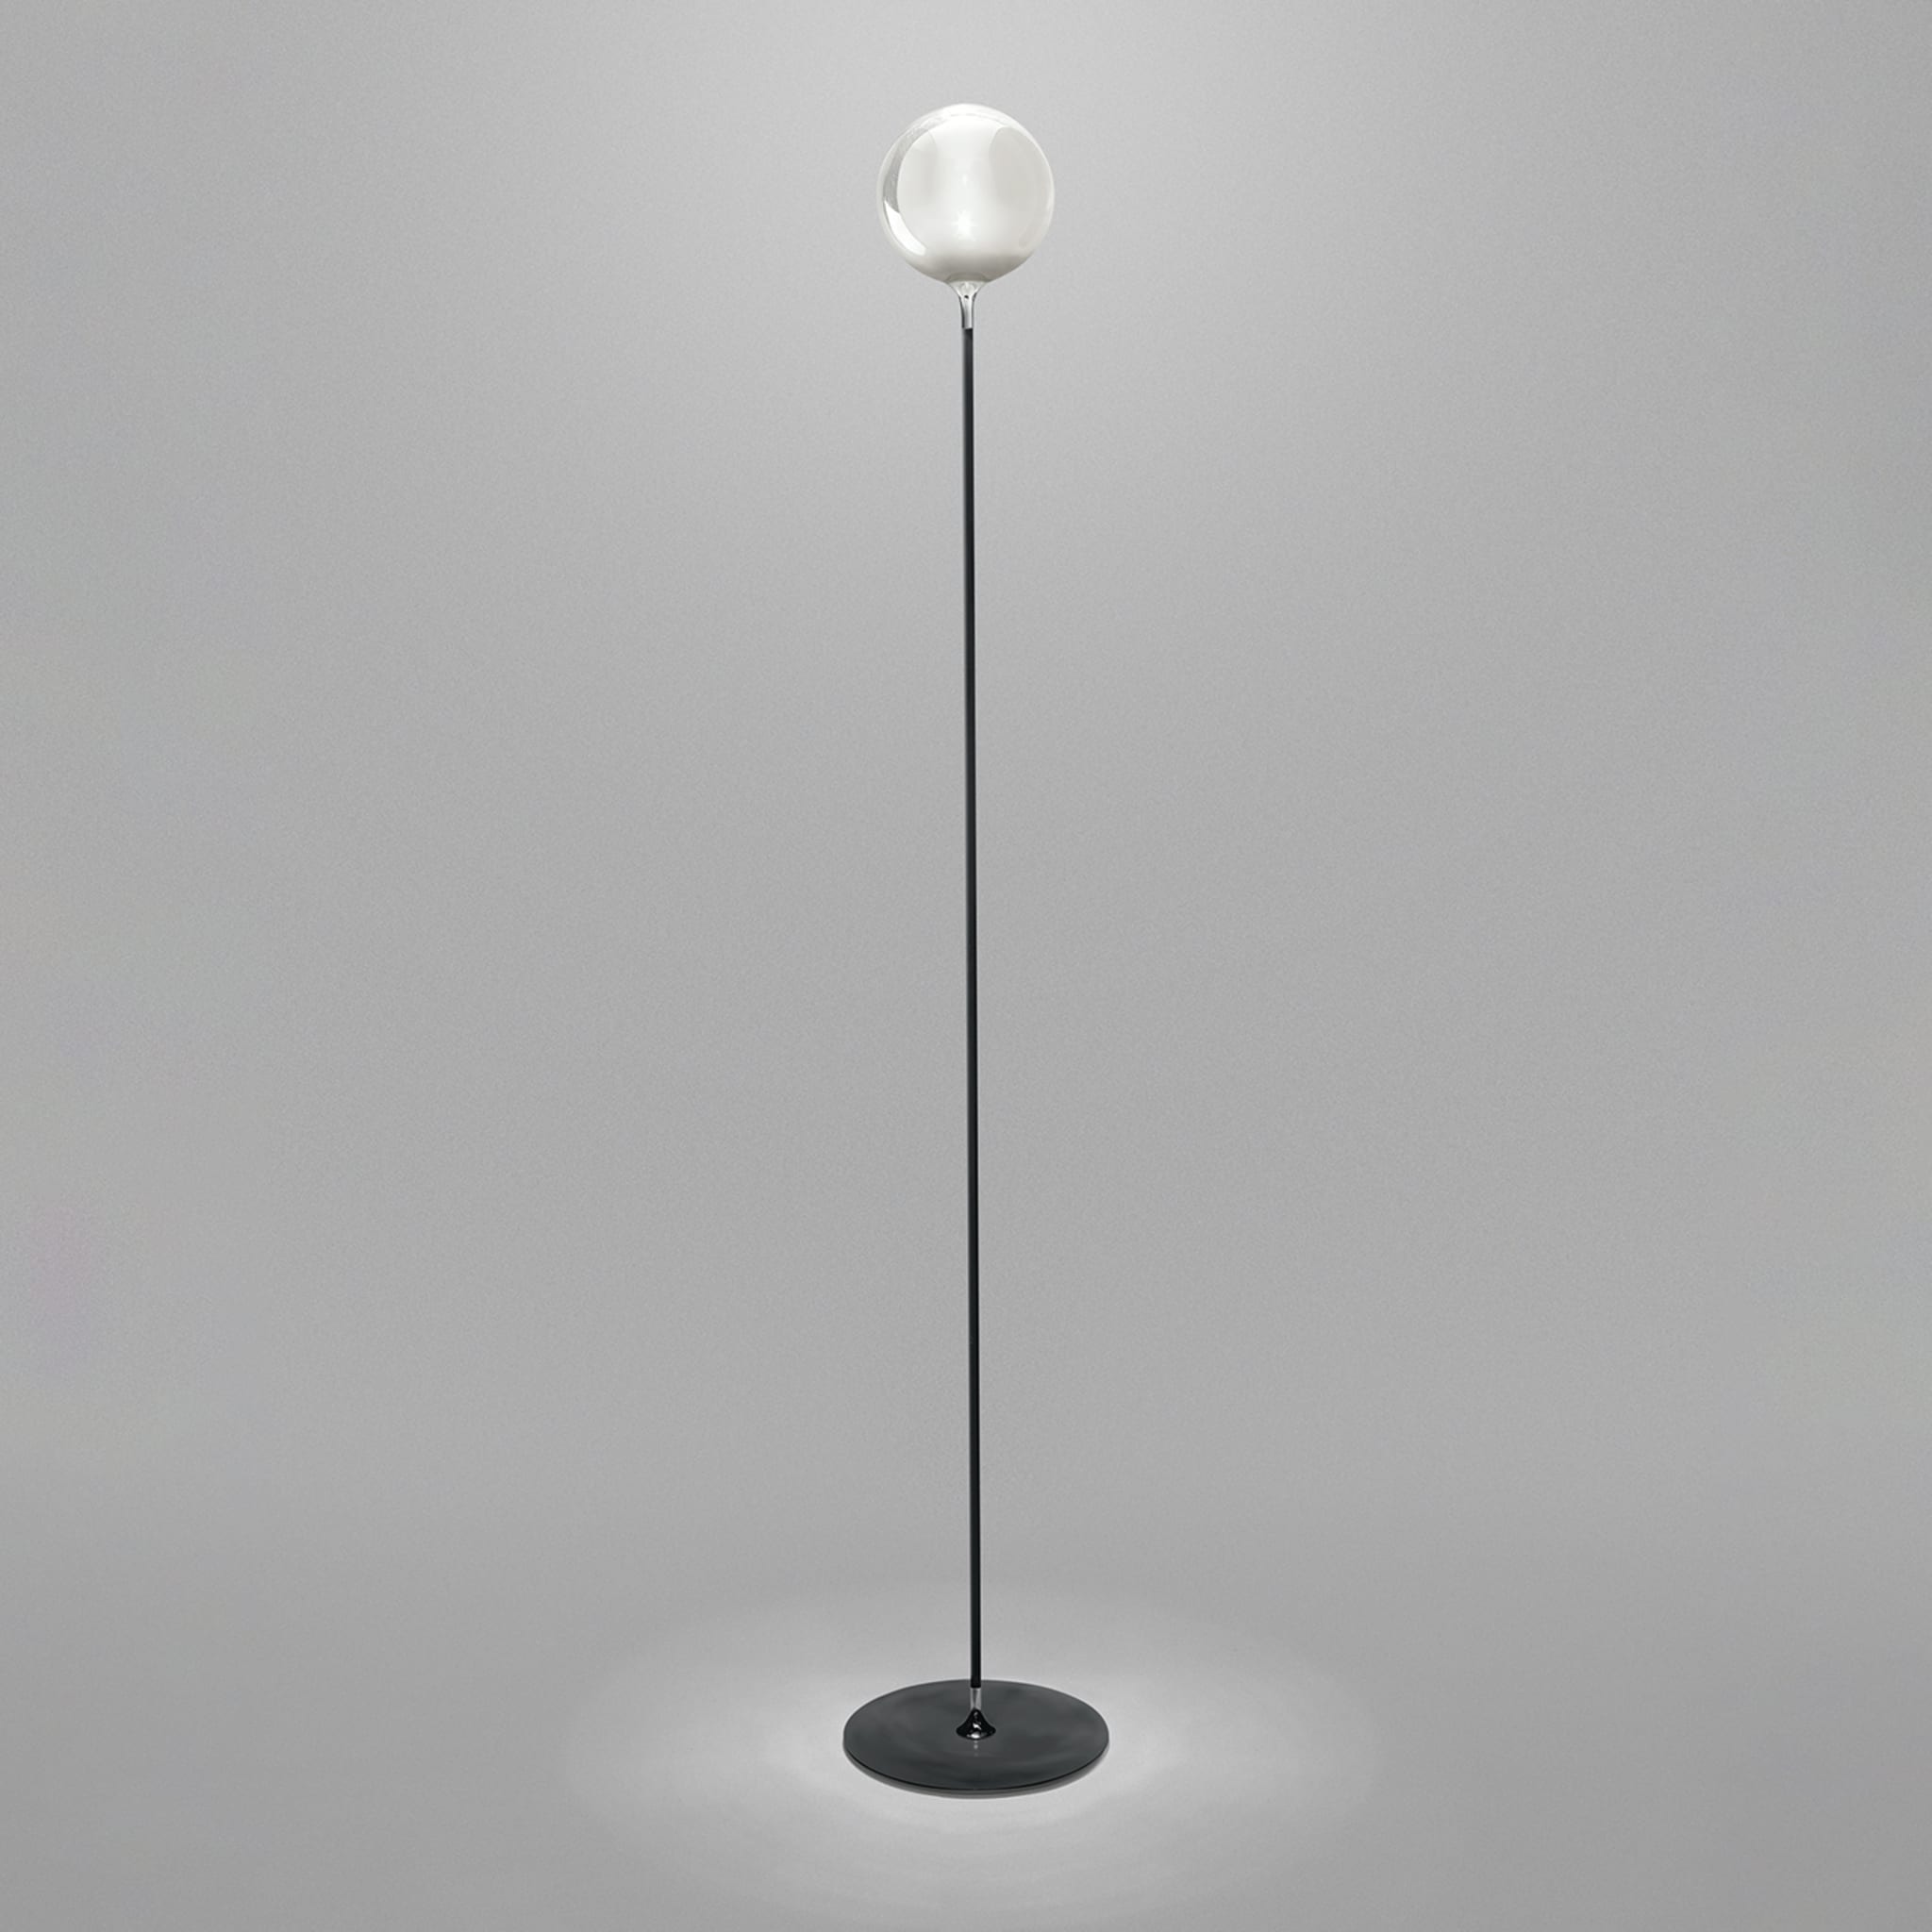 Palloncino Black Floor Lamp by Franco Raggi - Alternative view 1